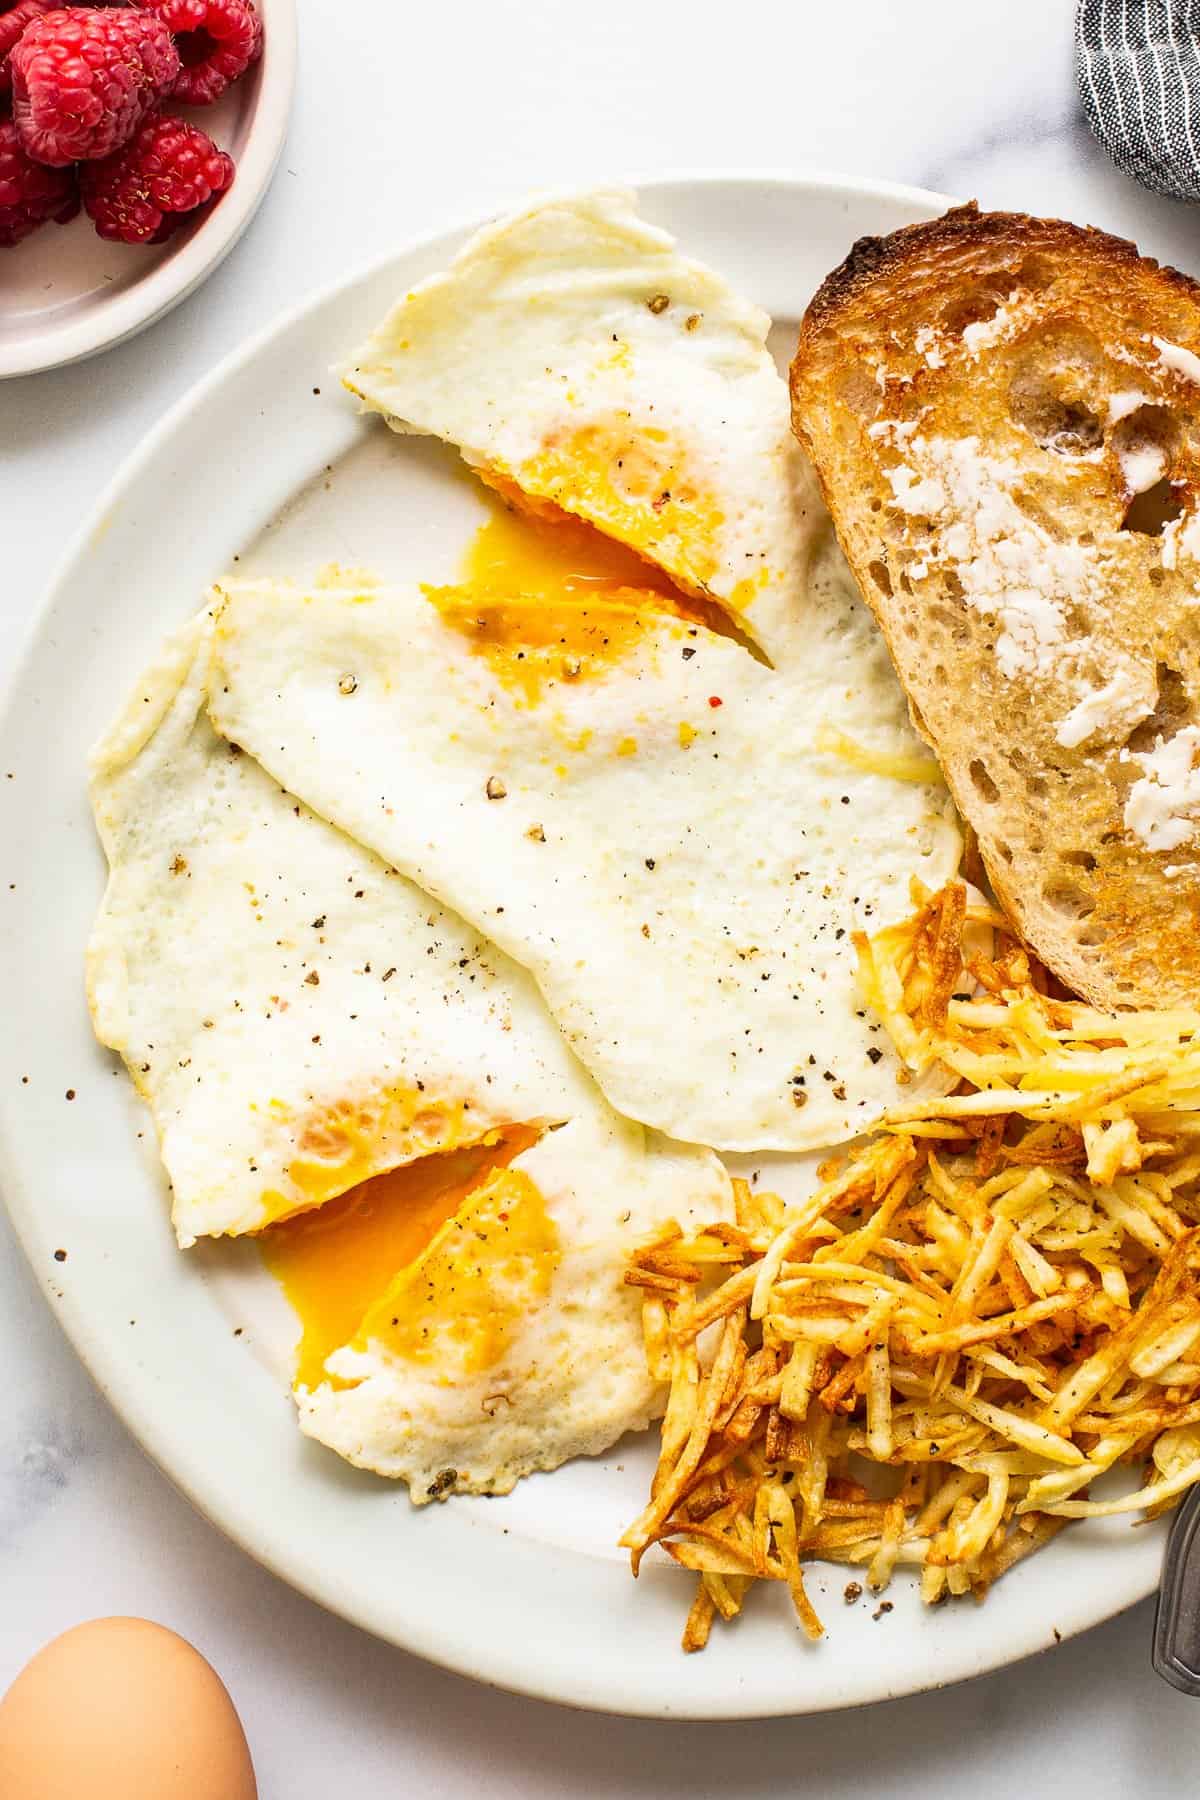 Over medium eggs on a plate with toast.